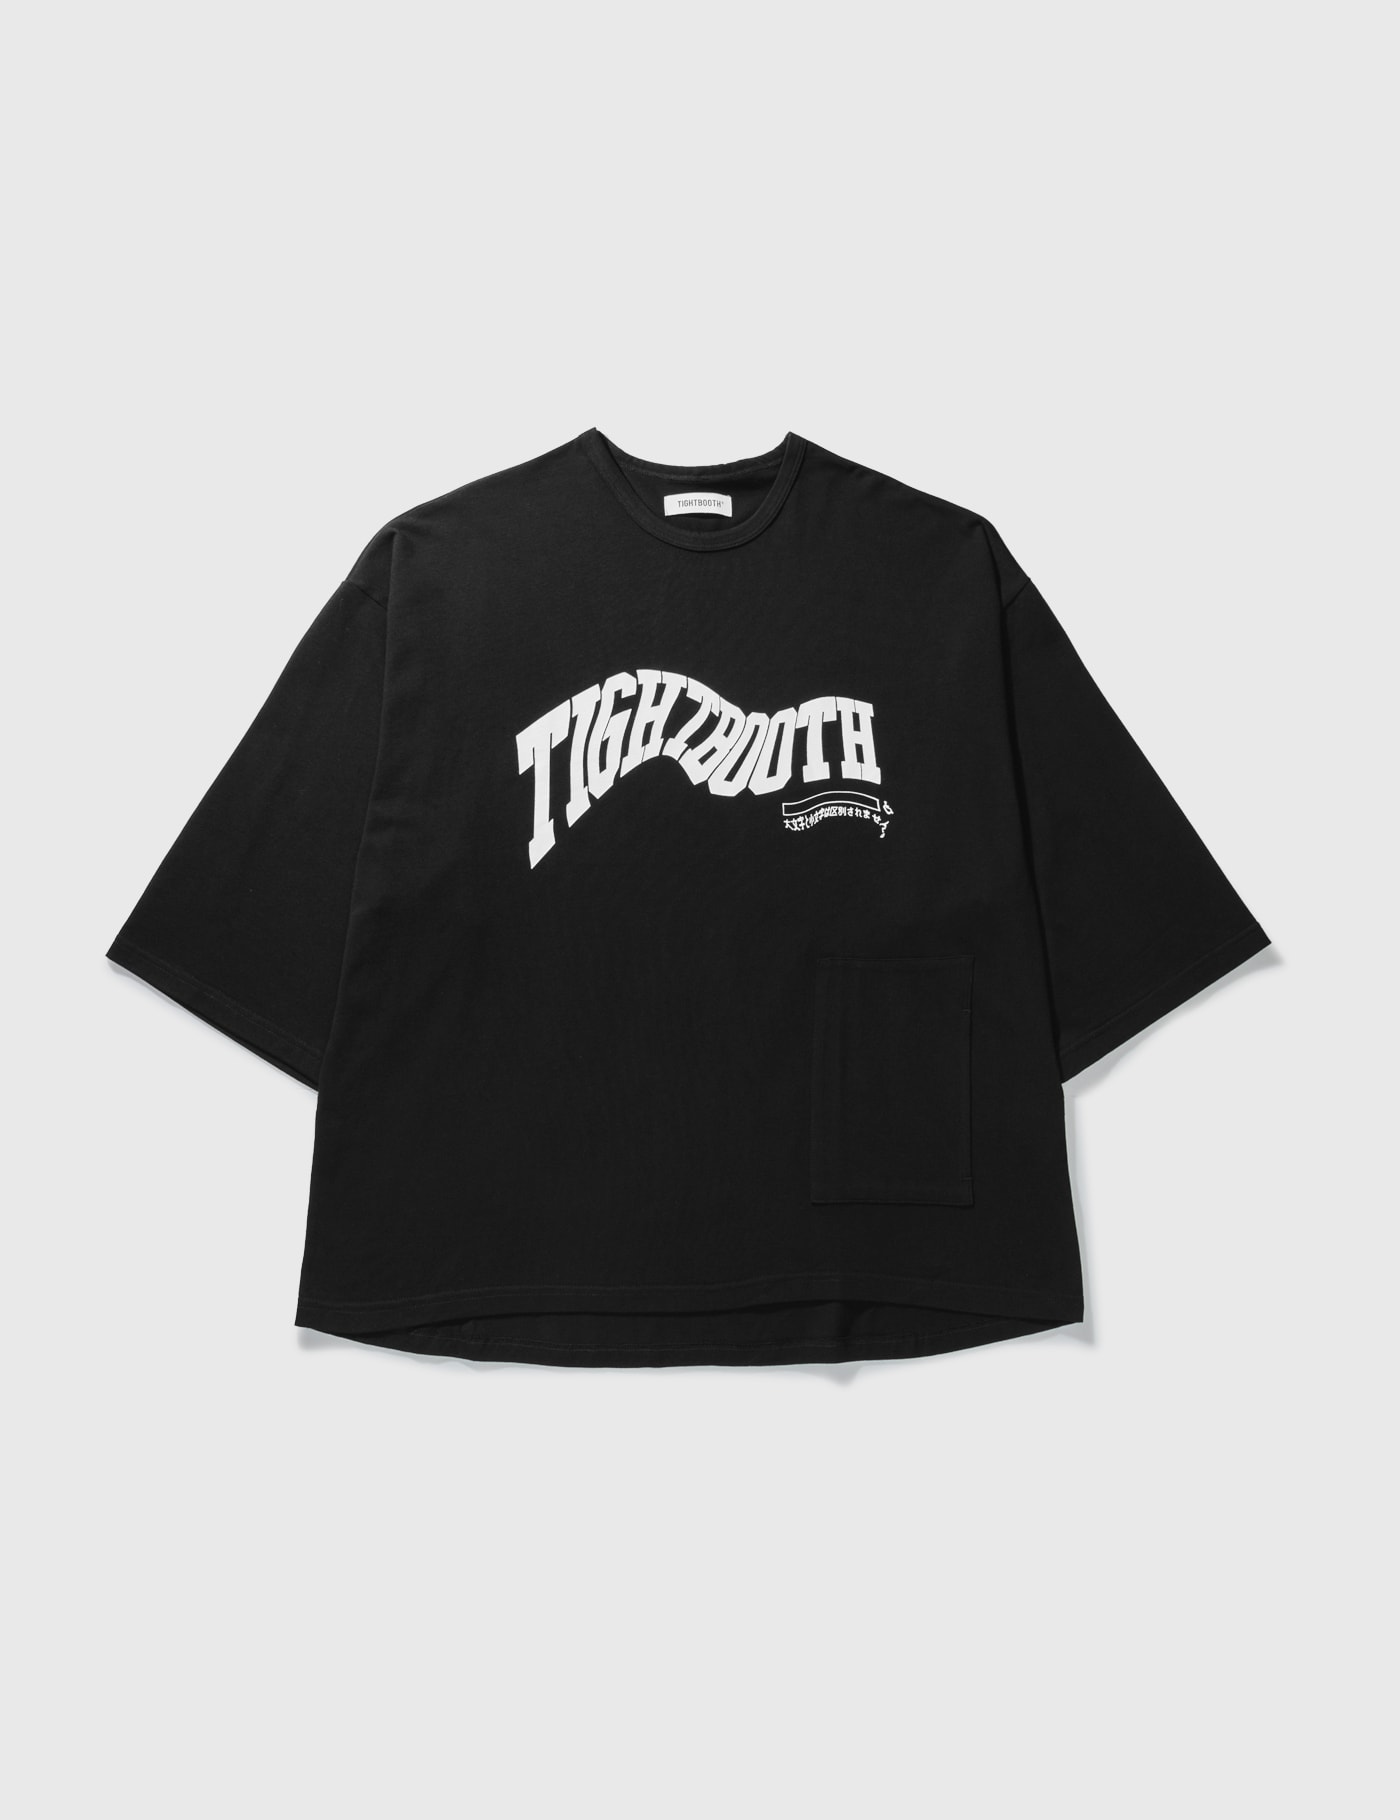 Tightbooth Acid Logo 7 T-shirt In Black